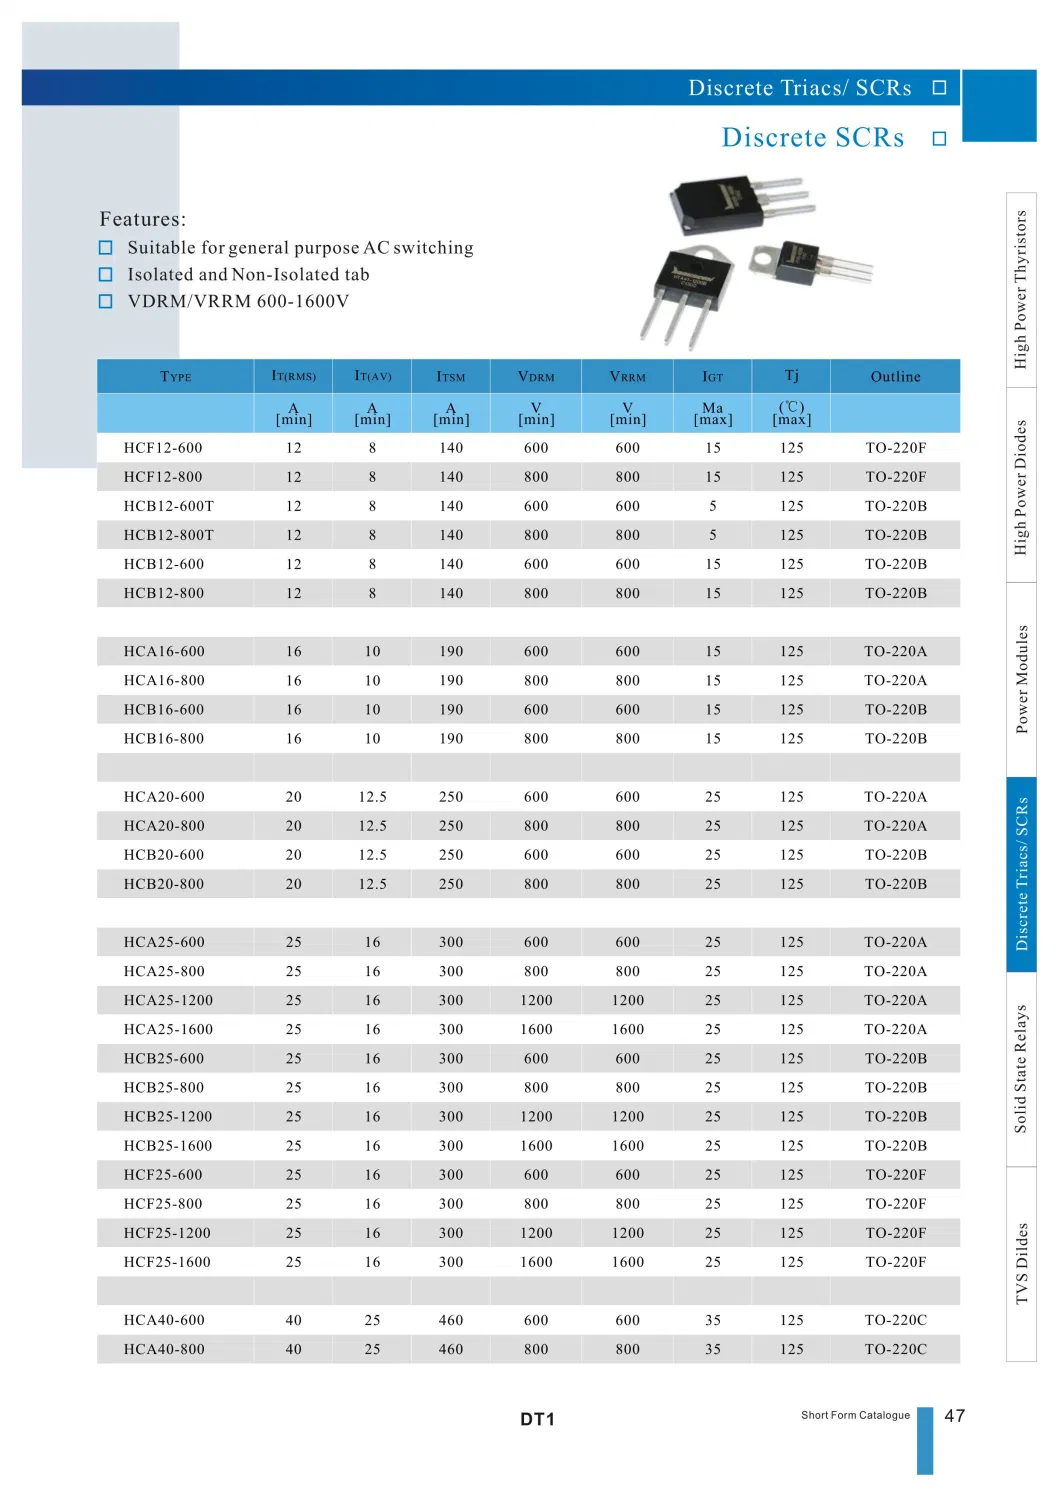 SCR Thyristors Silicon Hcas70-1200, Hcas70-1600, Hcas70-1800 1200V/1800V to-247s Semiconductor Price